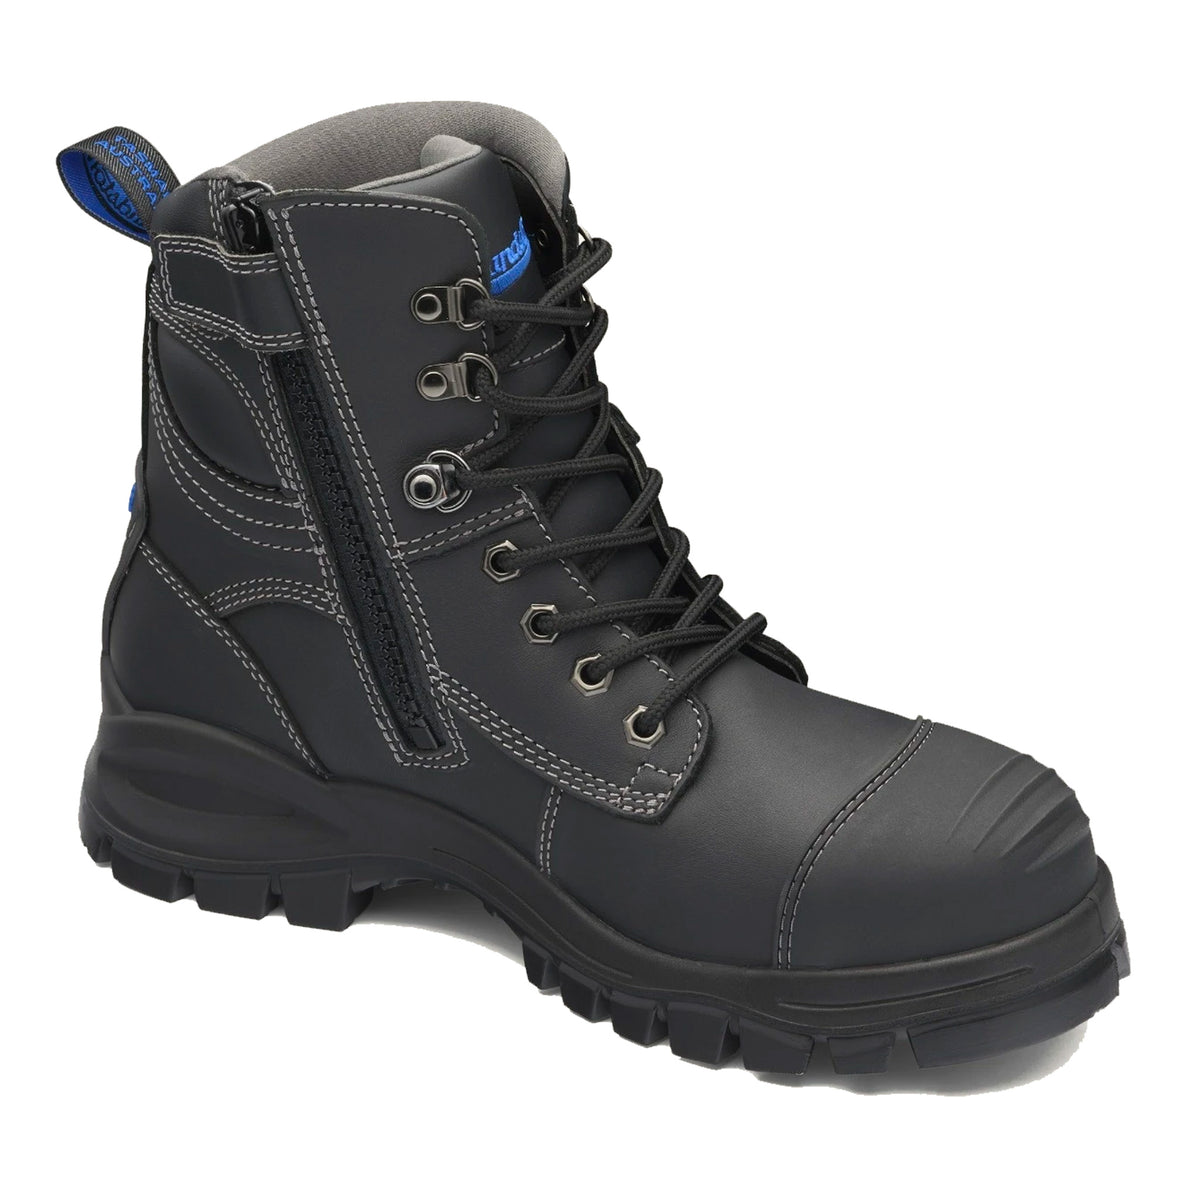 blundstone 997 platinum leather steel toe work boot in black